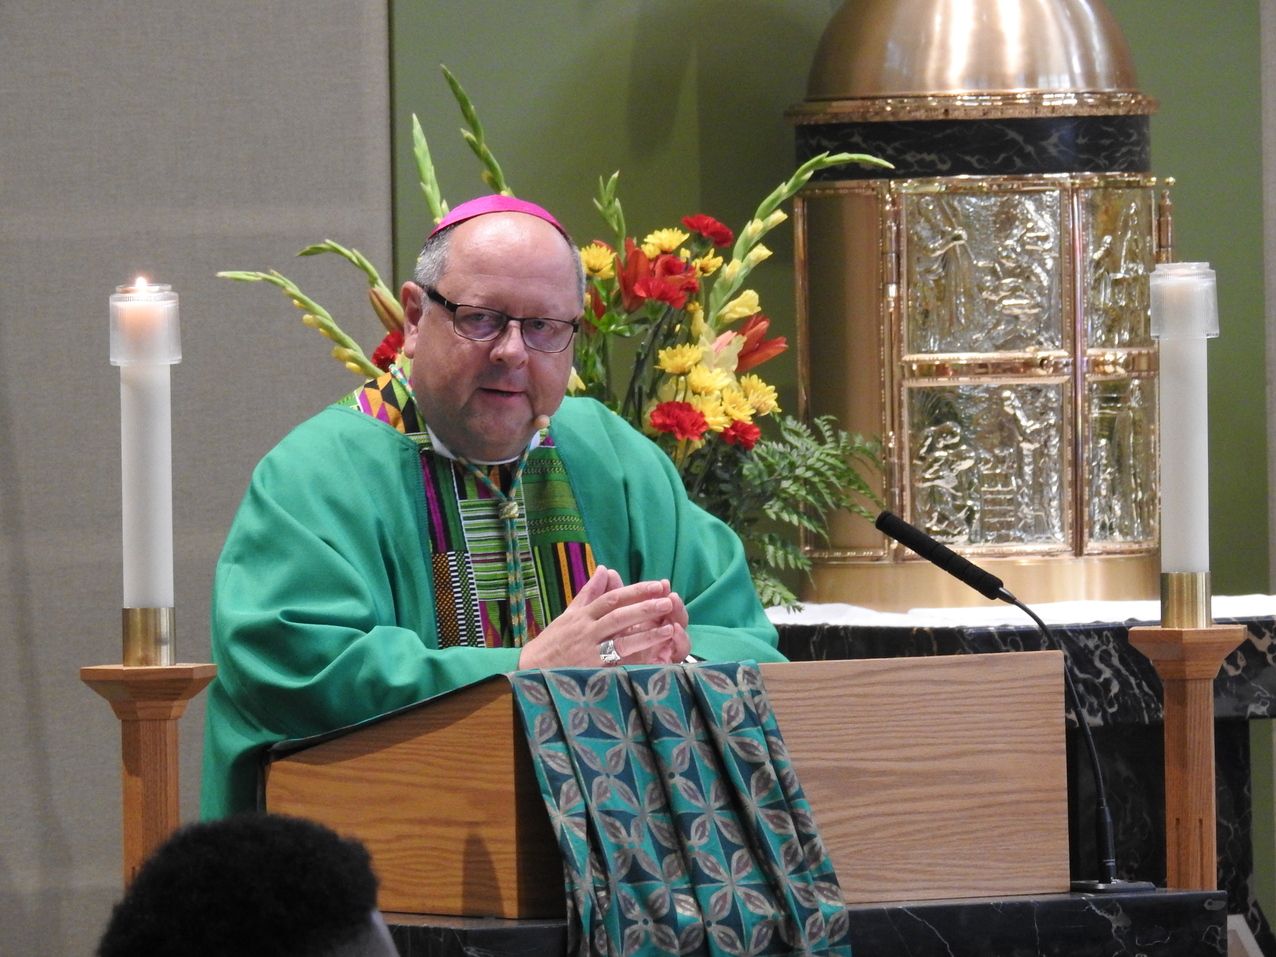 St. Agnes + Our Lady of Fatima dedicates new parish hall during bishop’s visit